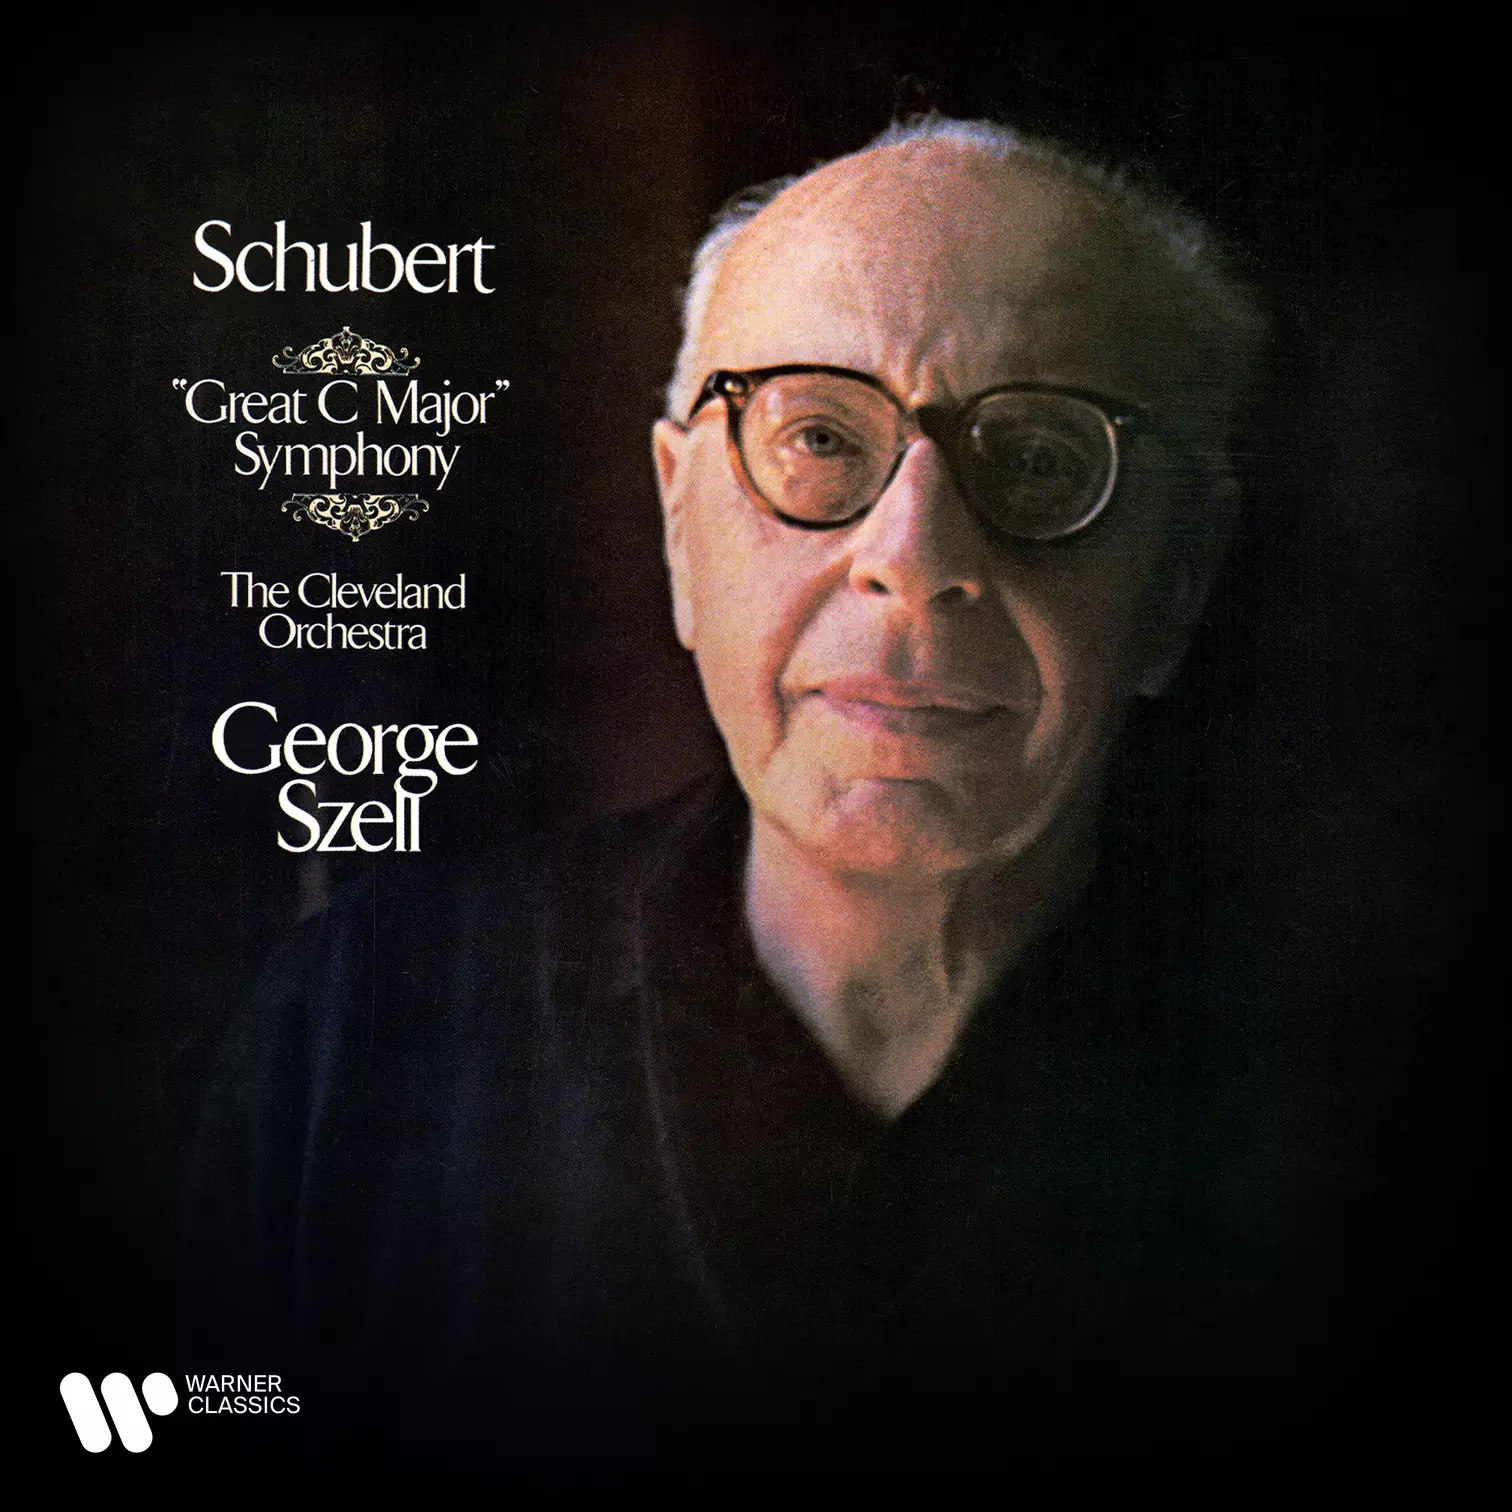 Schubert: Symphony No. 9 “The Great”